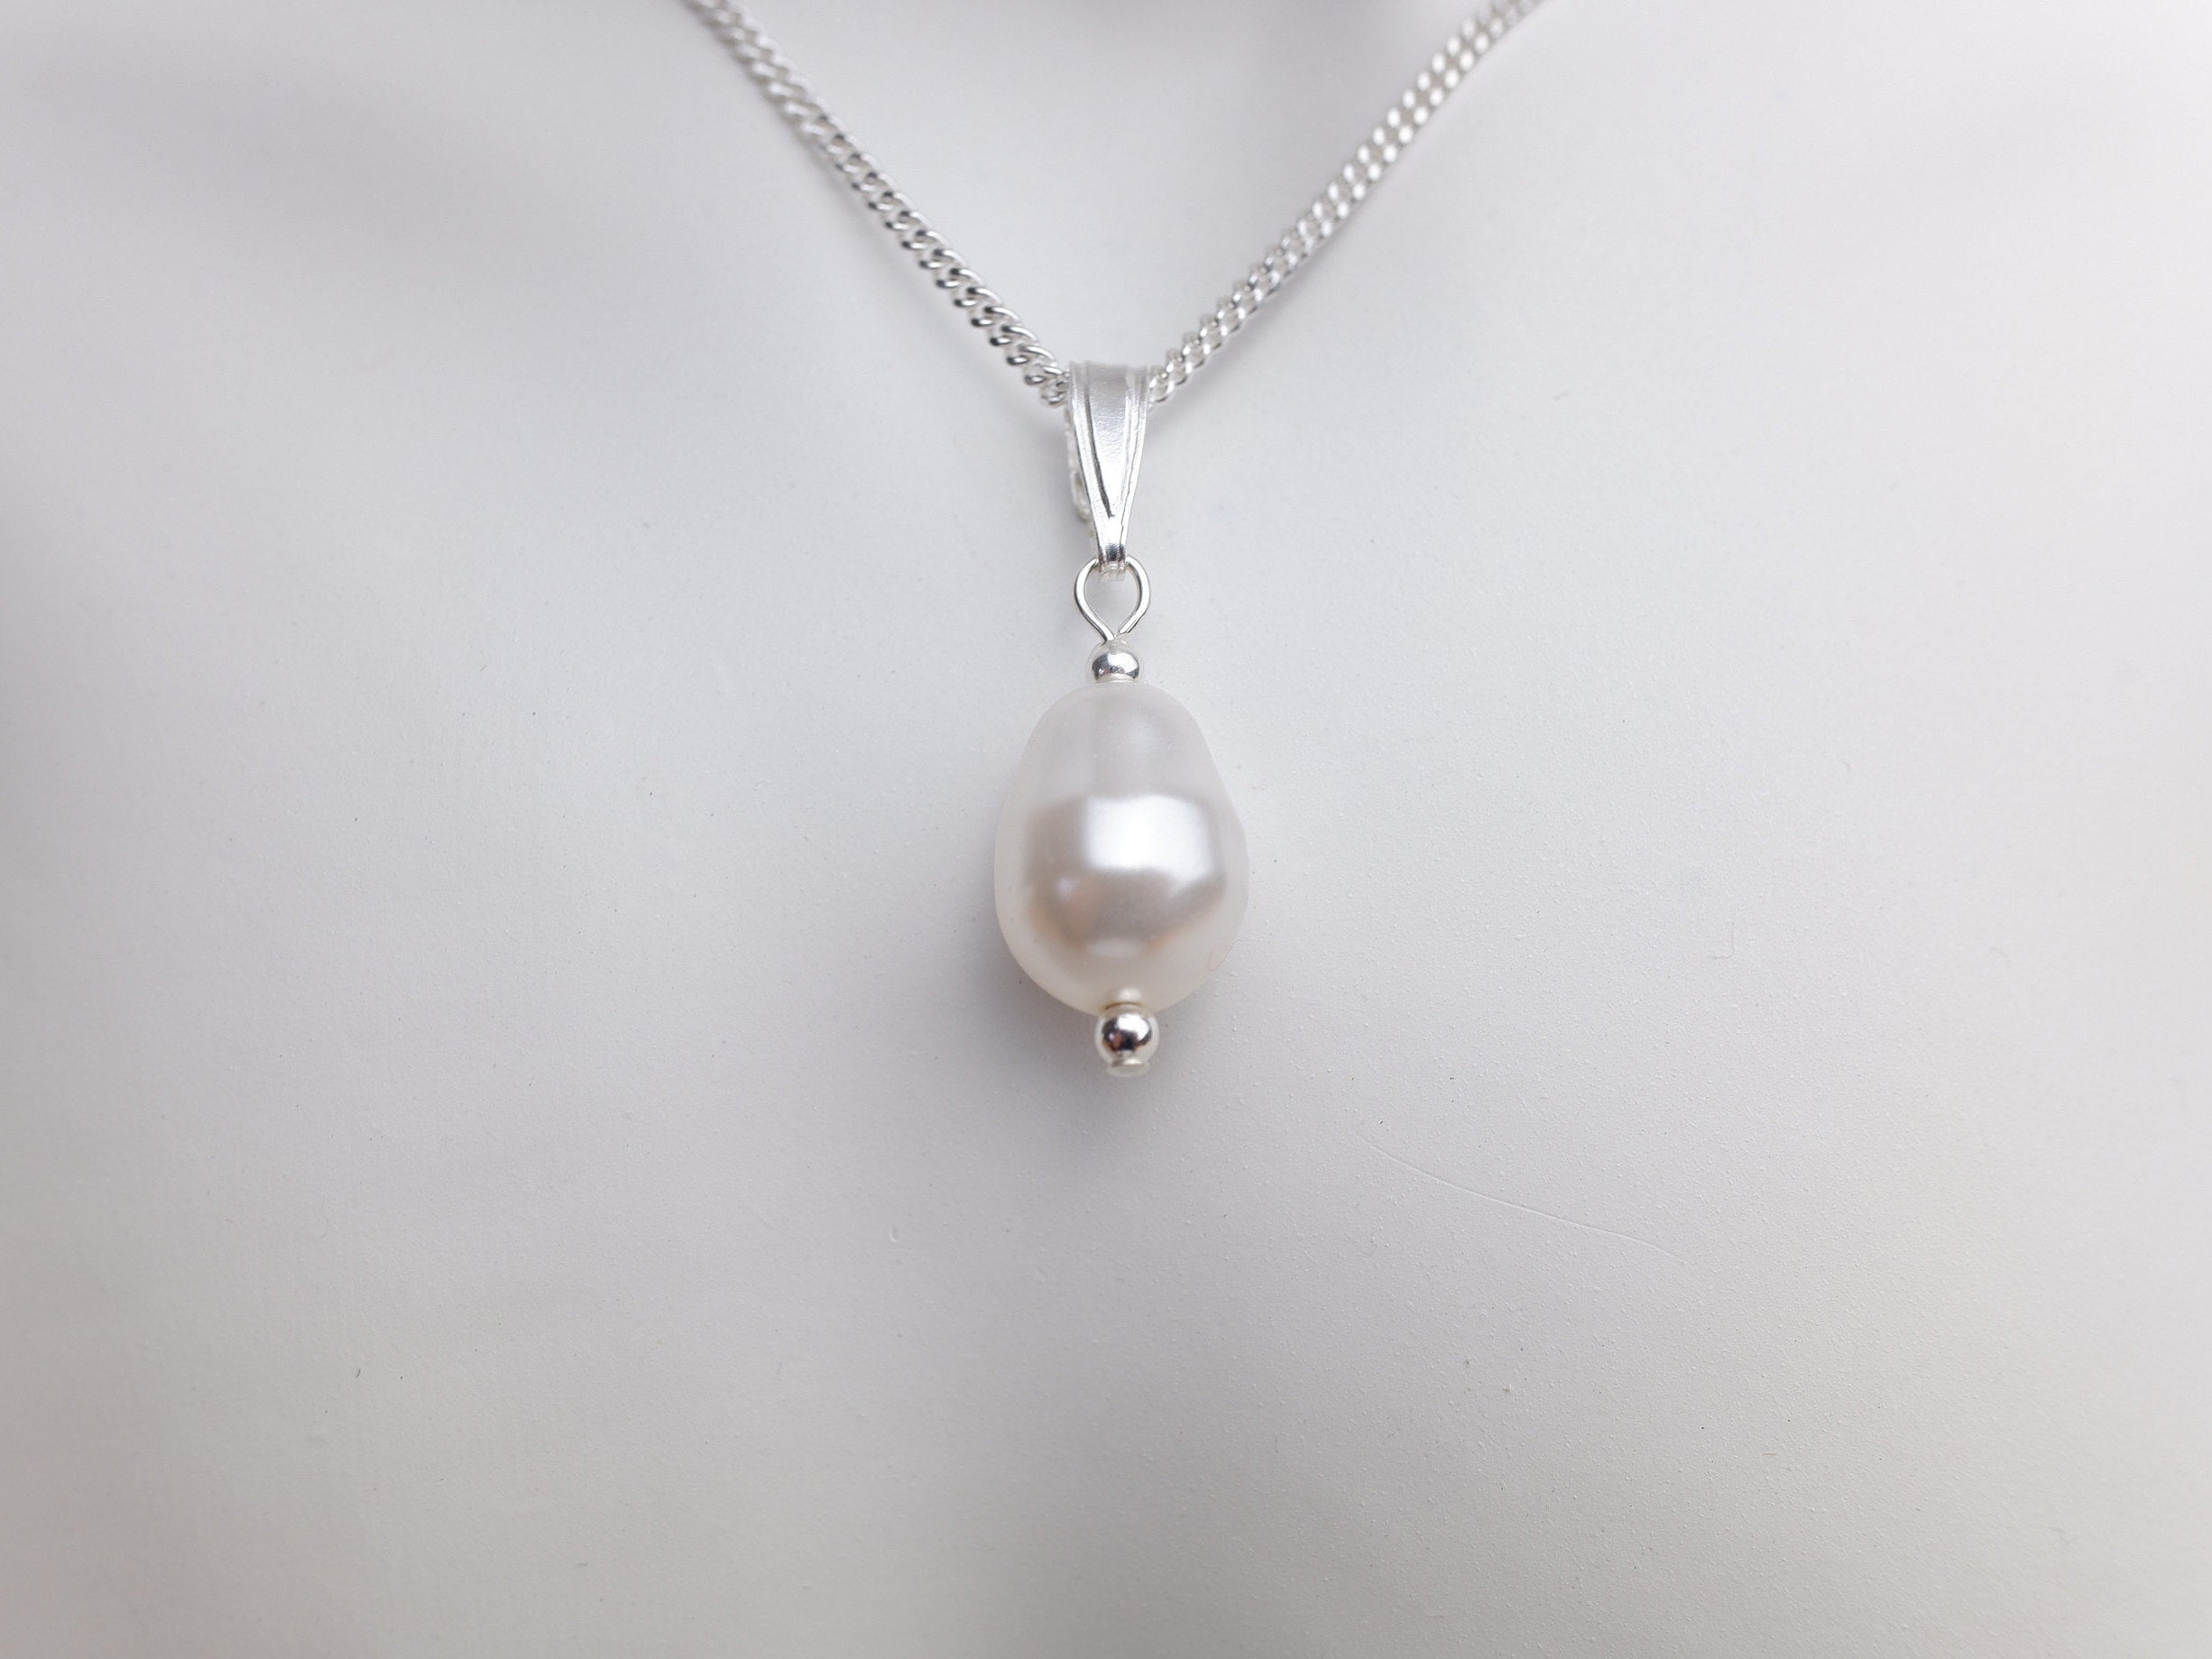 Swarovski Treasure necklace White, Rhodium plated- 5563288 New | eBay